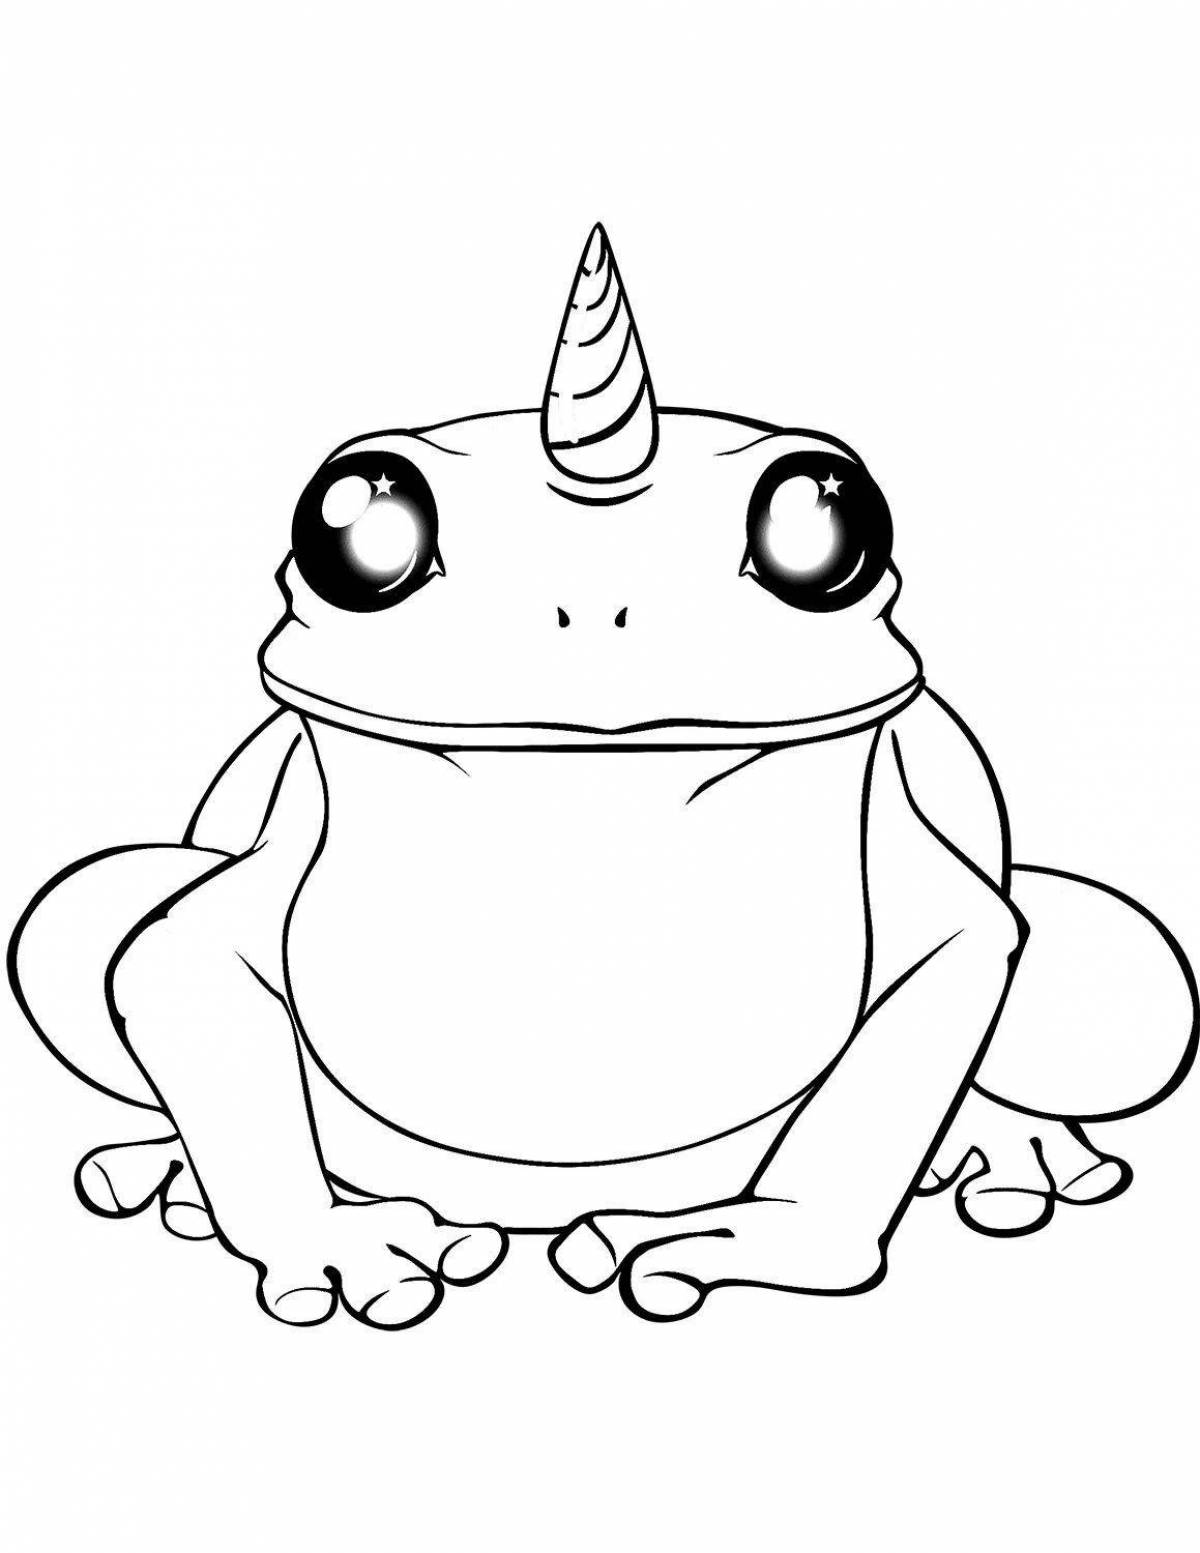 Adorable kawaii frog coloring book